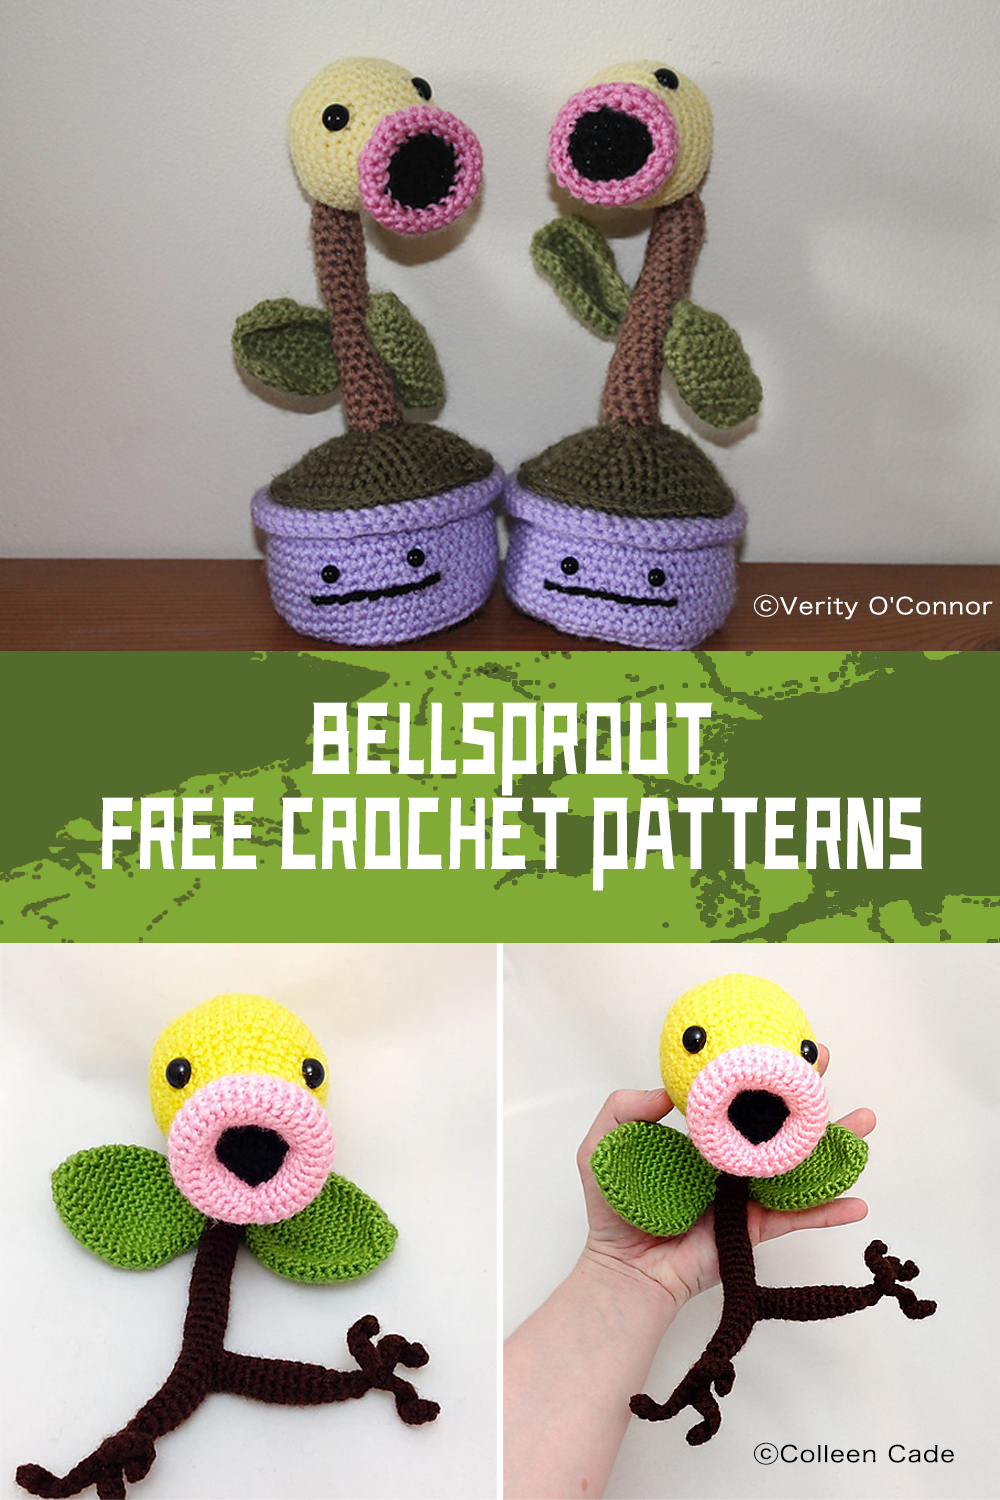 Bellsprout FREE Crochet Patterns